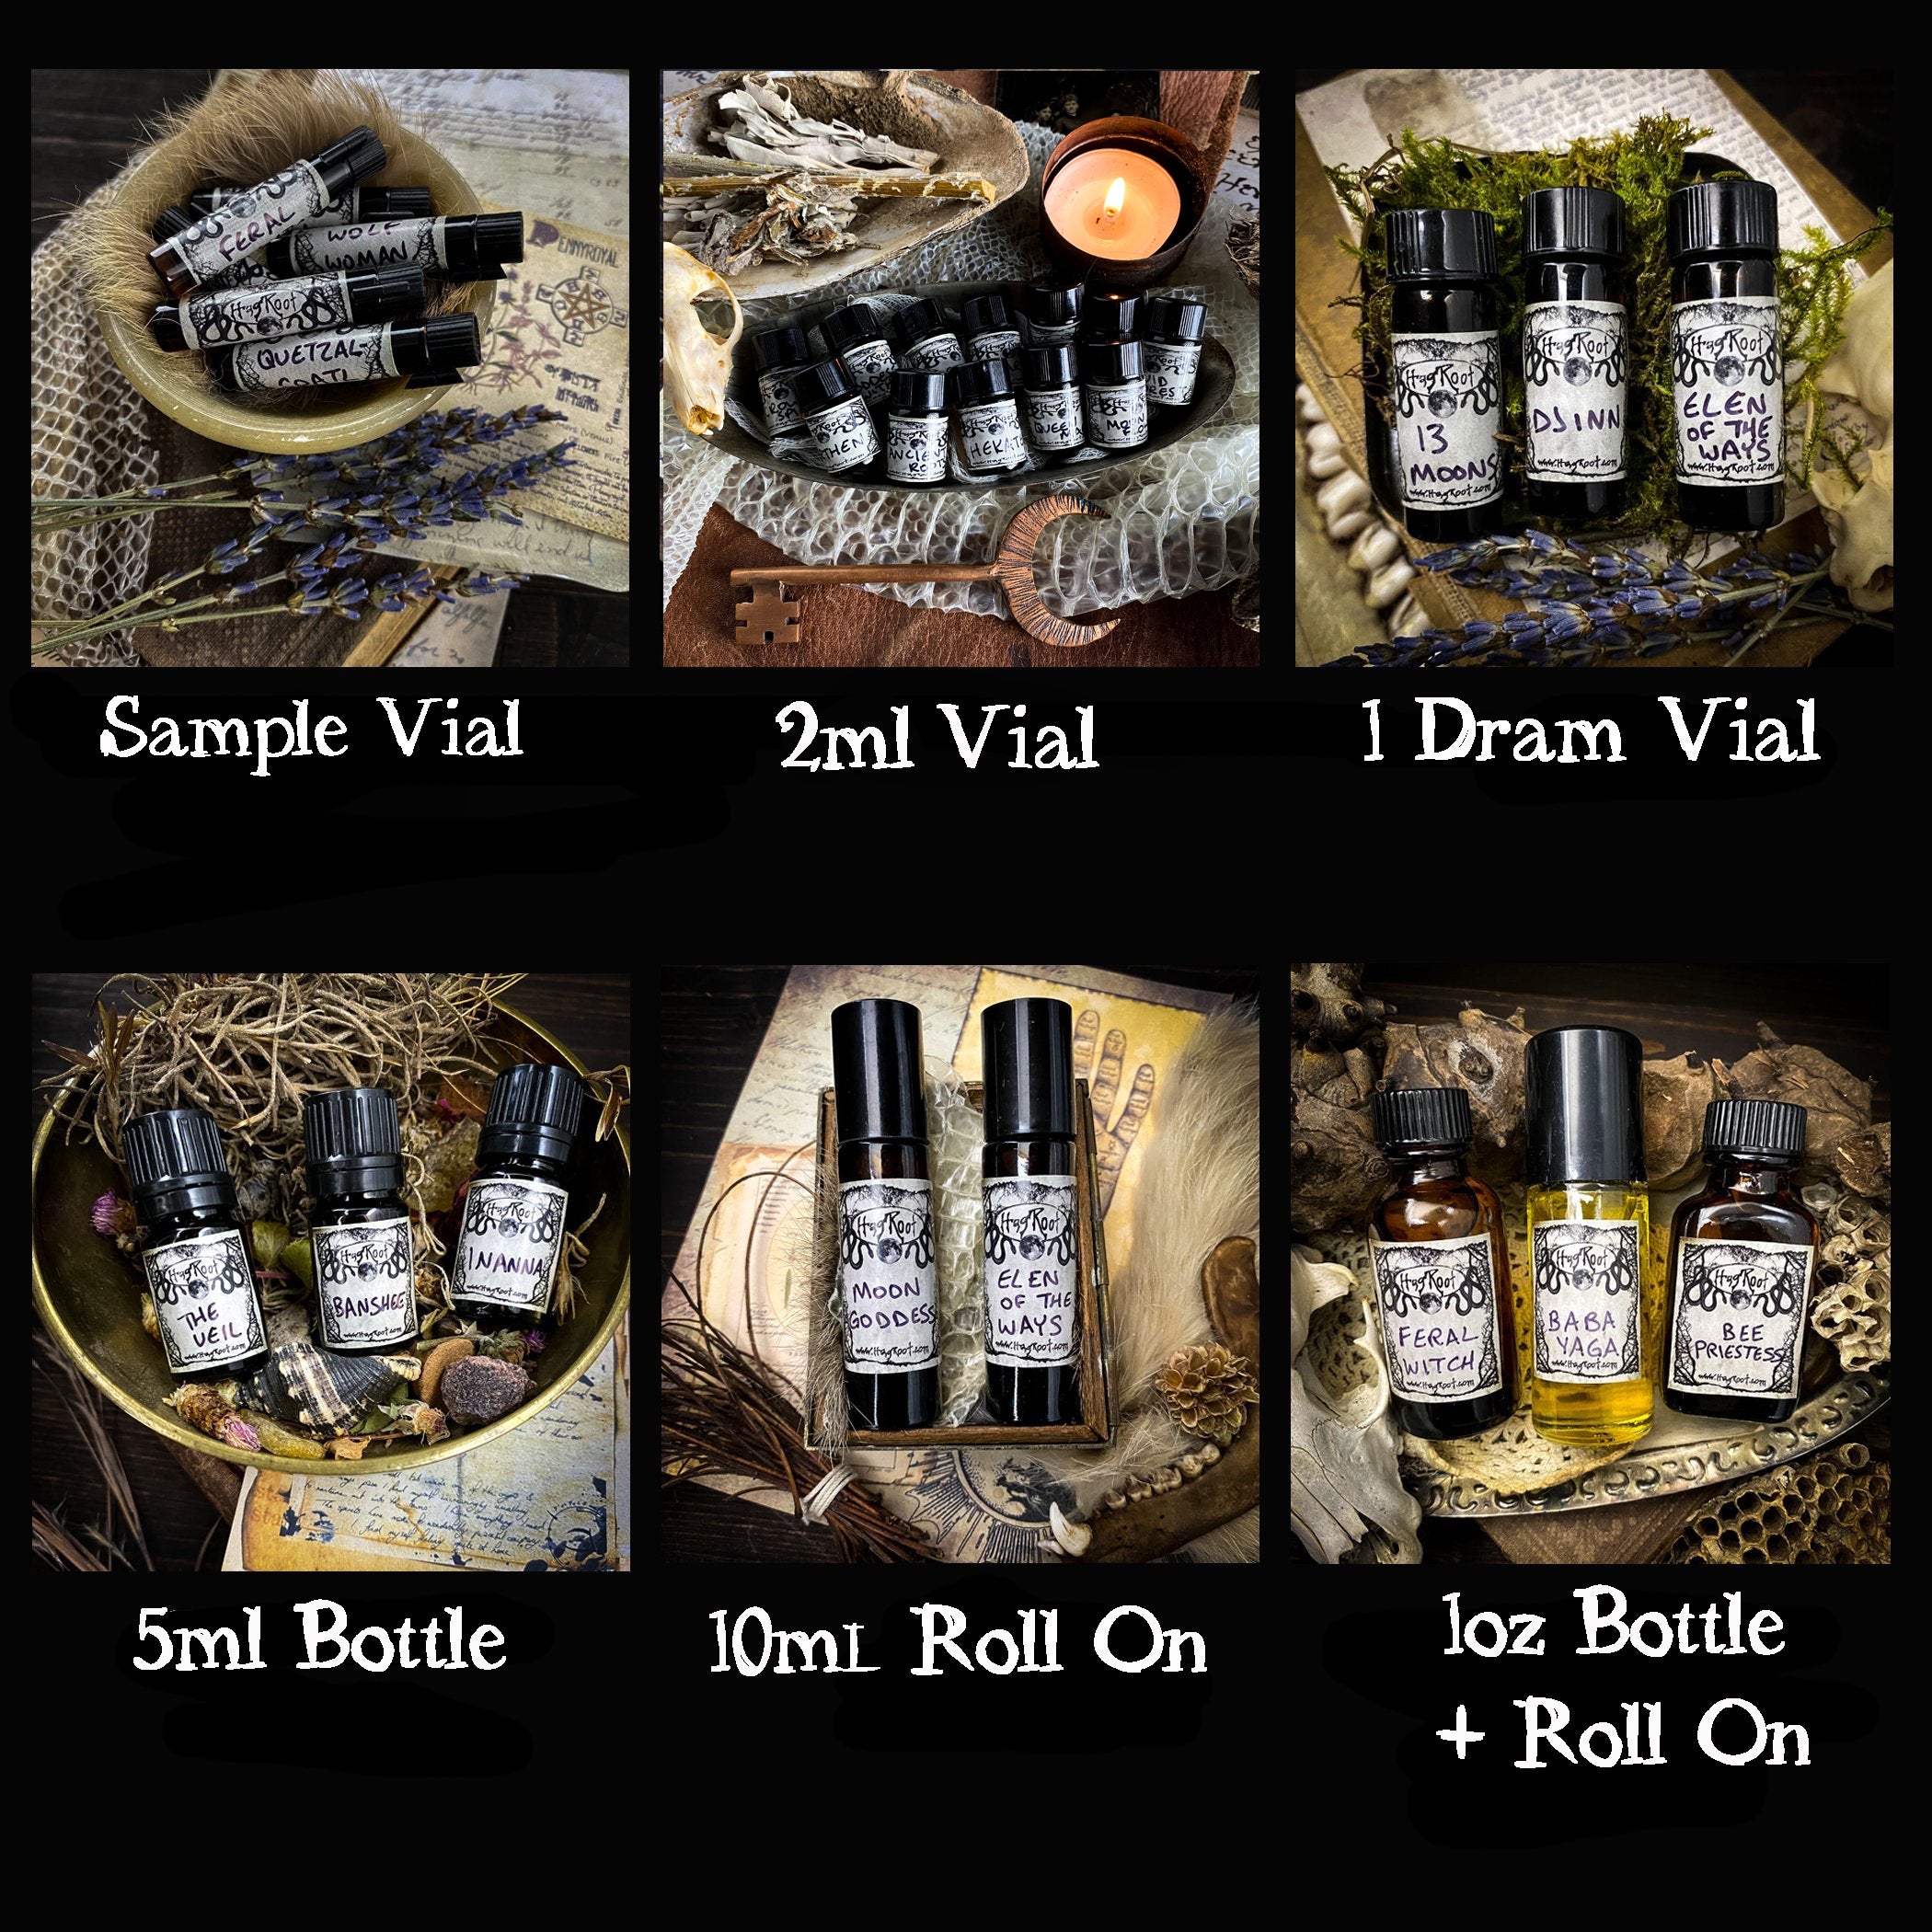 ANCIENT HEART-(Black Tea Leaves, Mahogany Wood, Tobacco)-Perfume, Cologne, Anointing, Ritual Oil